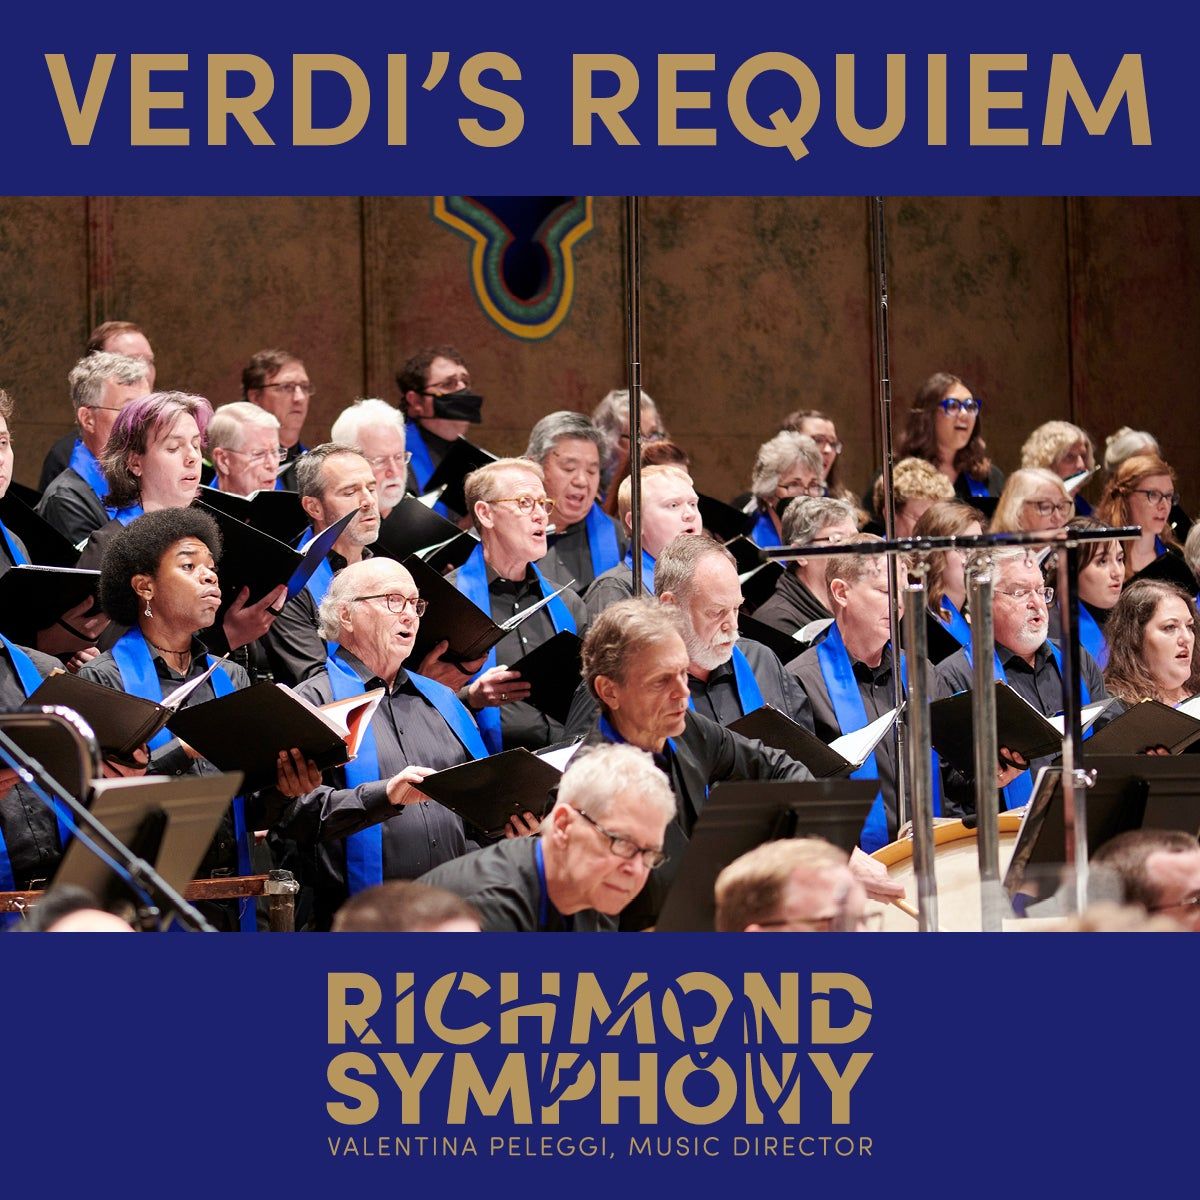 Richmond Symphony - Verdi's Requiem (Concert)